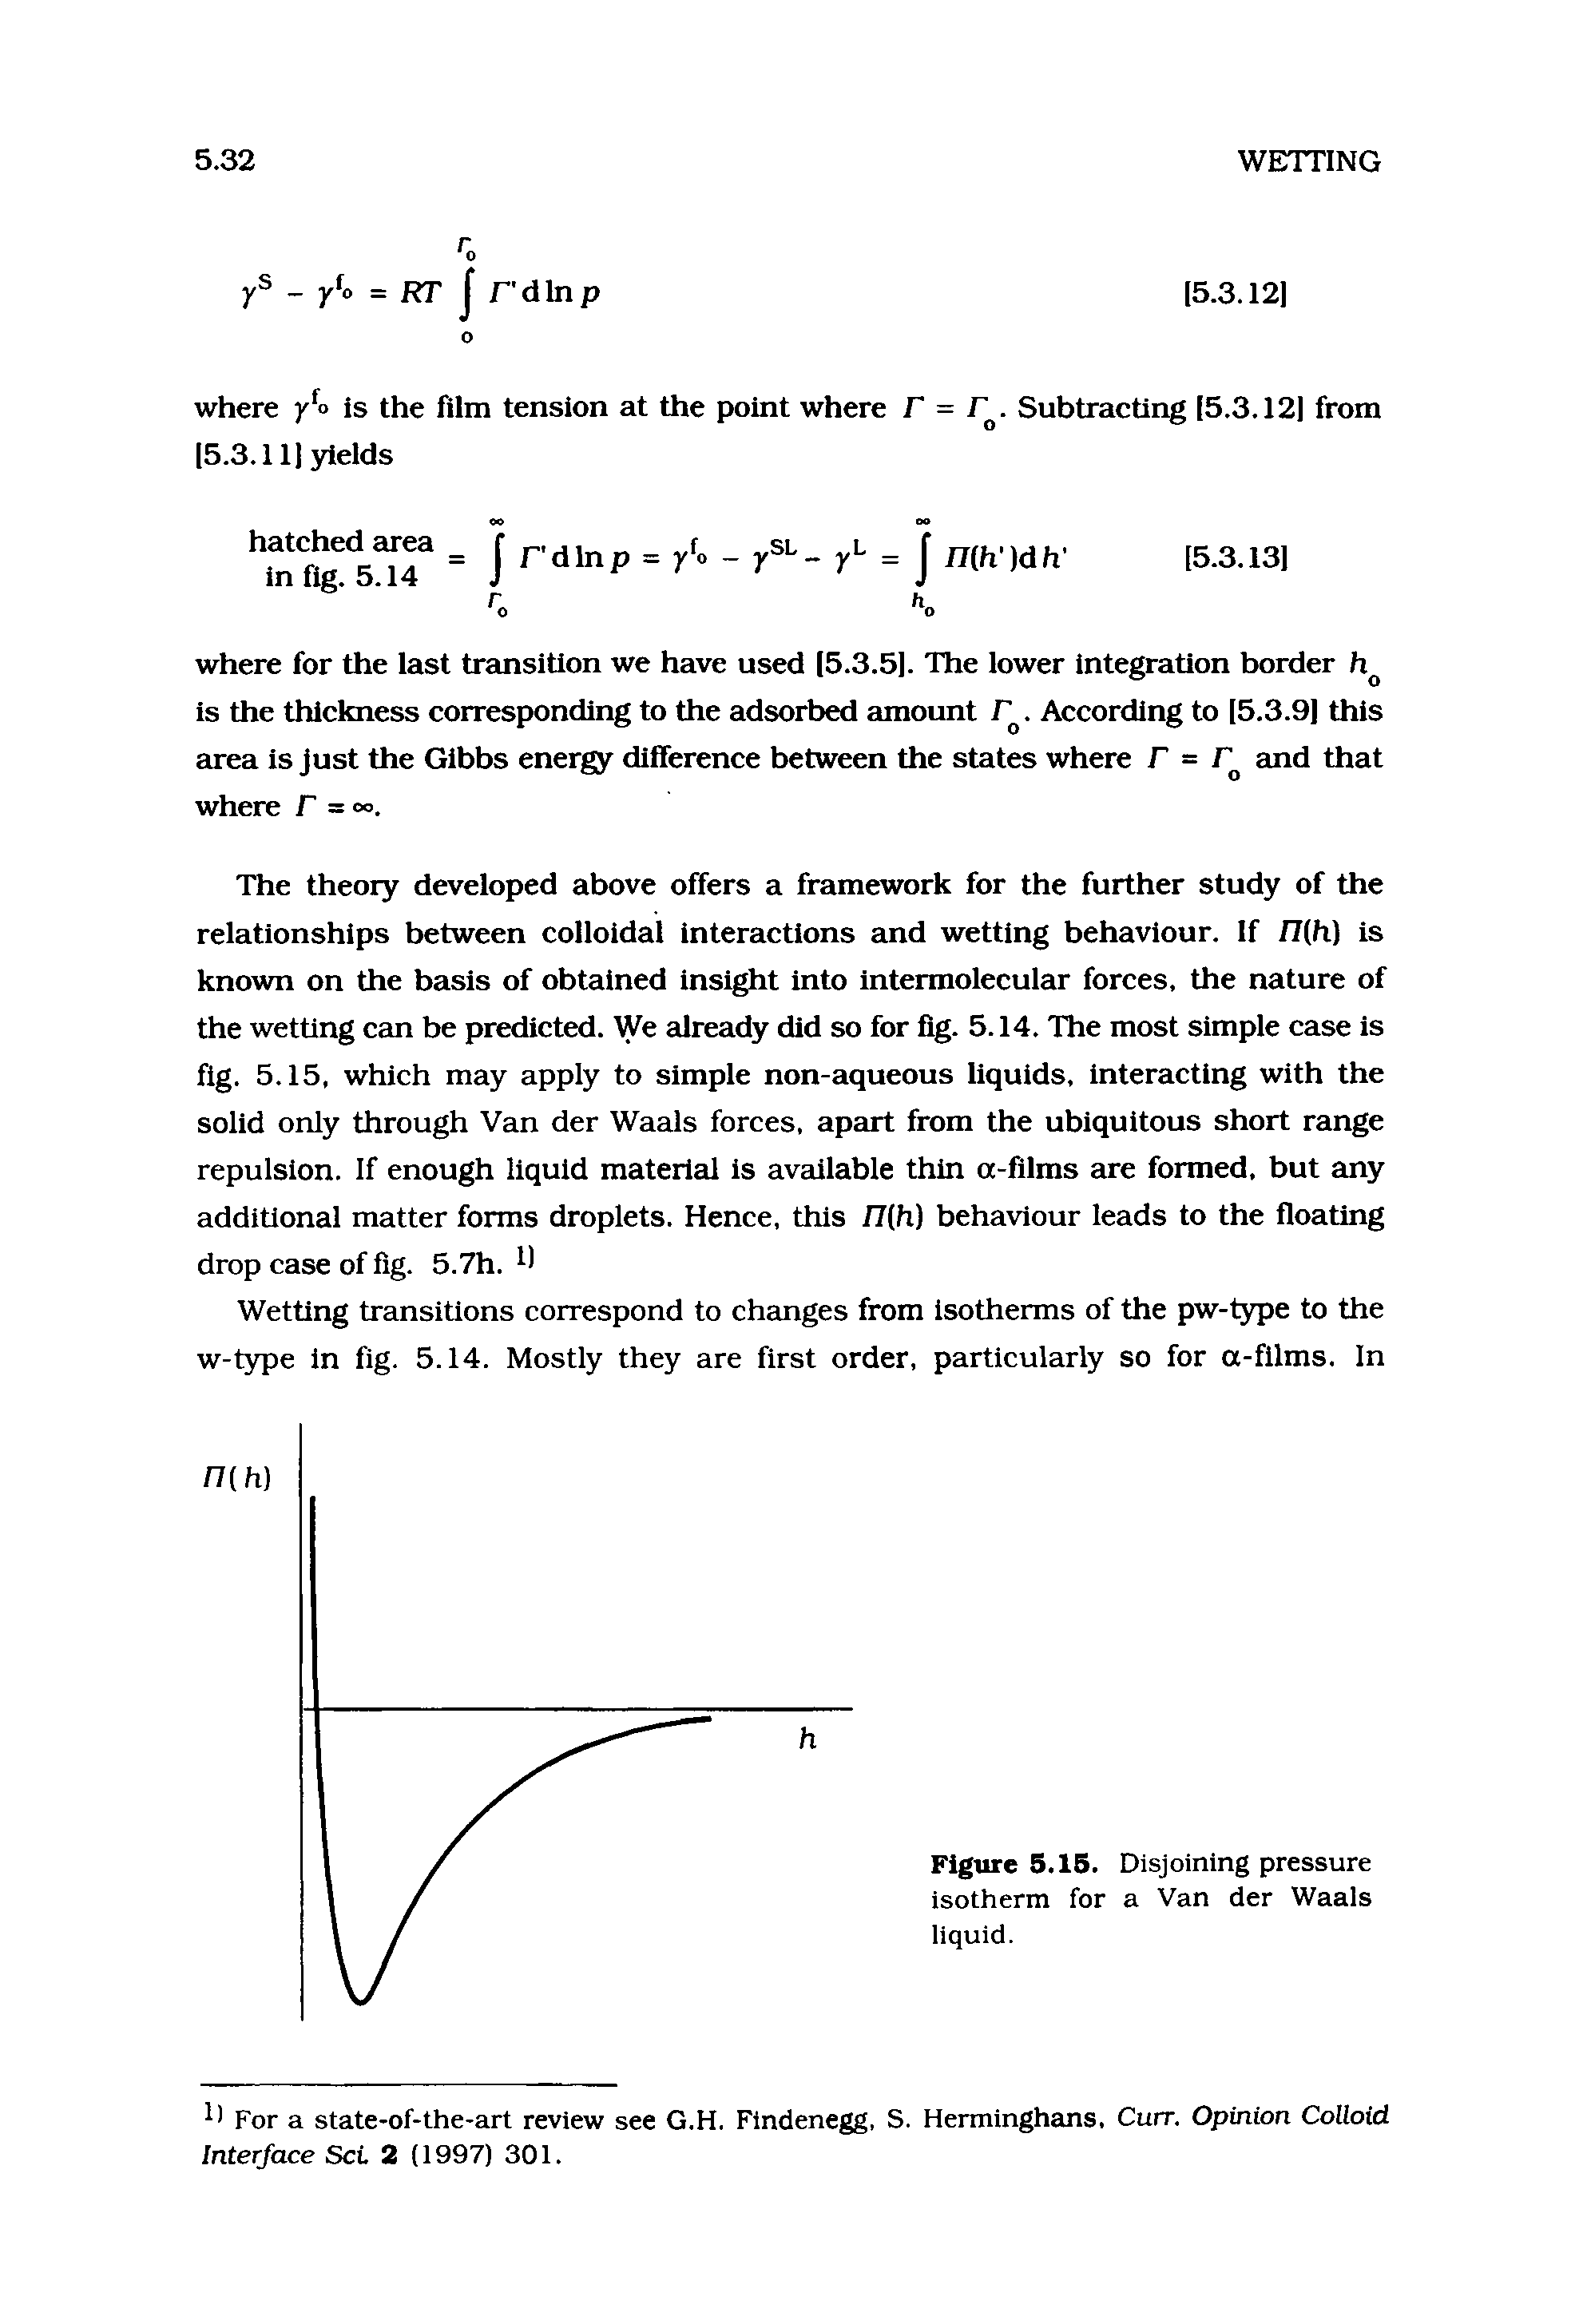 Figure 5.15. Disjoining pressure isotherm for a Van der Waals liquid.